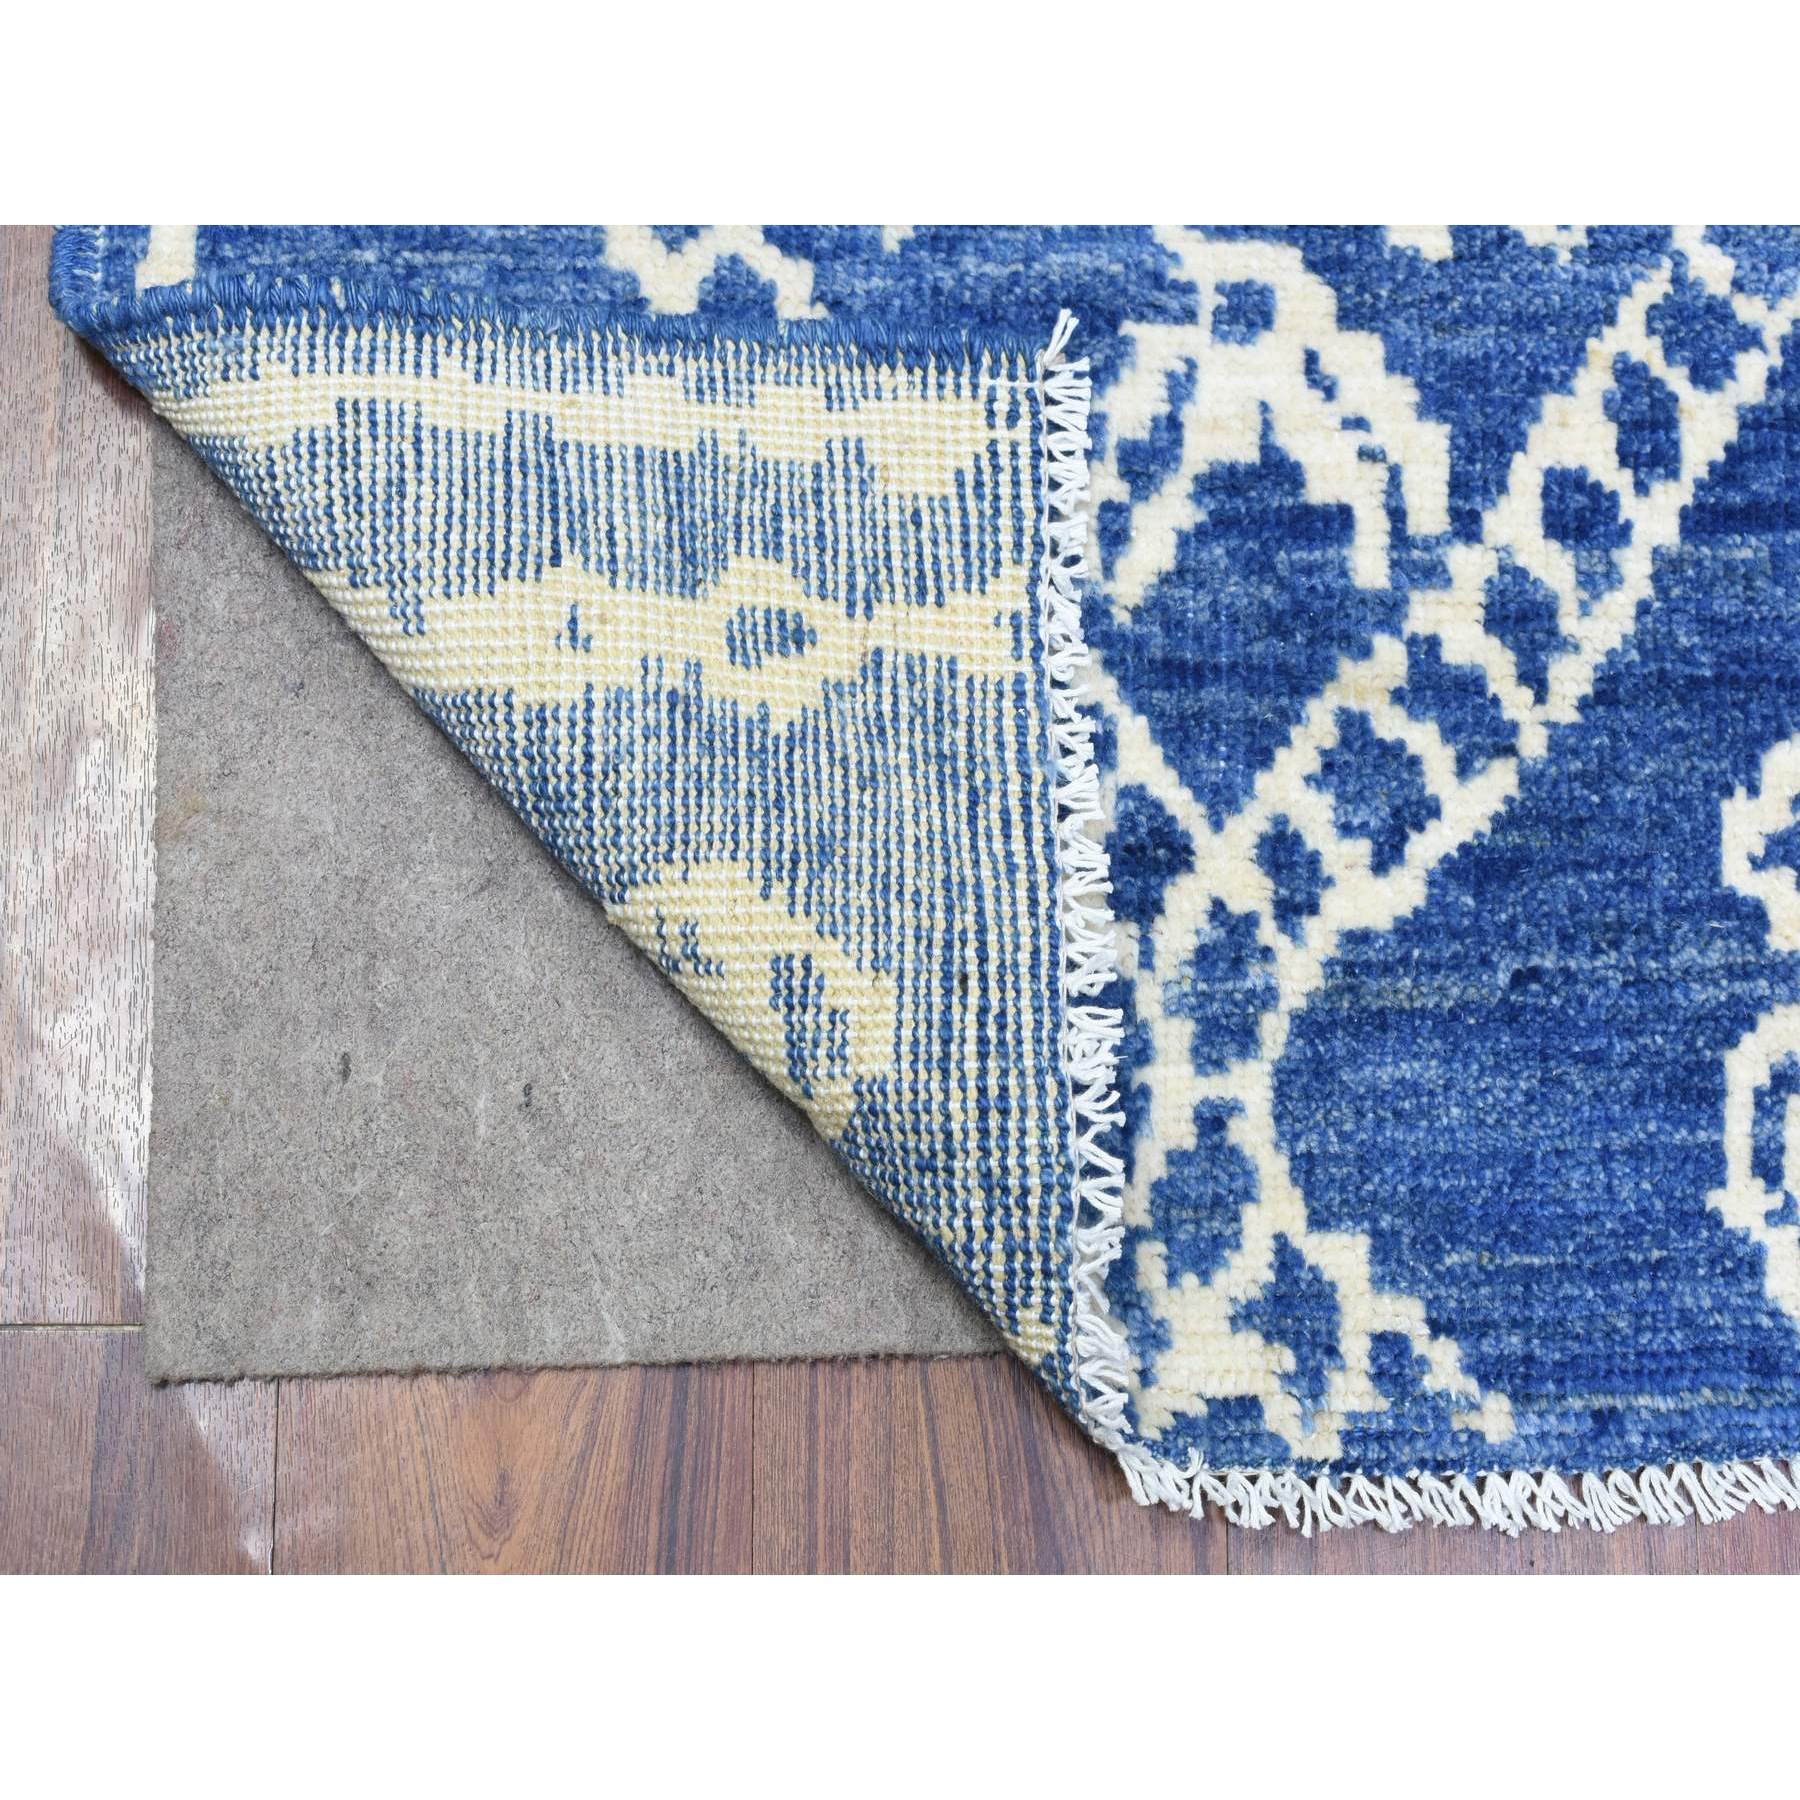 2'10"x9'8" Denim Blue, Boujaad Moroccan Berber Design with Geometric Triangular Design Natural Dyes, Velvety Wool Hand Woven, Runner Oriental Rug 